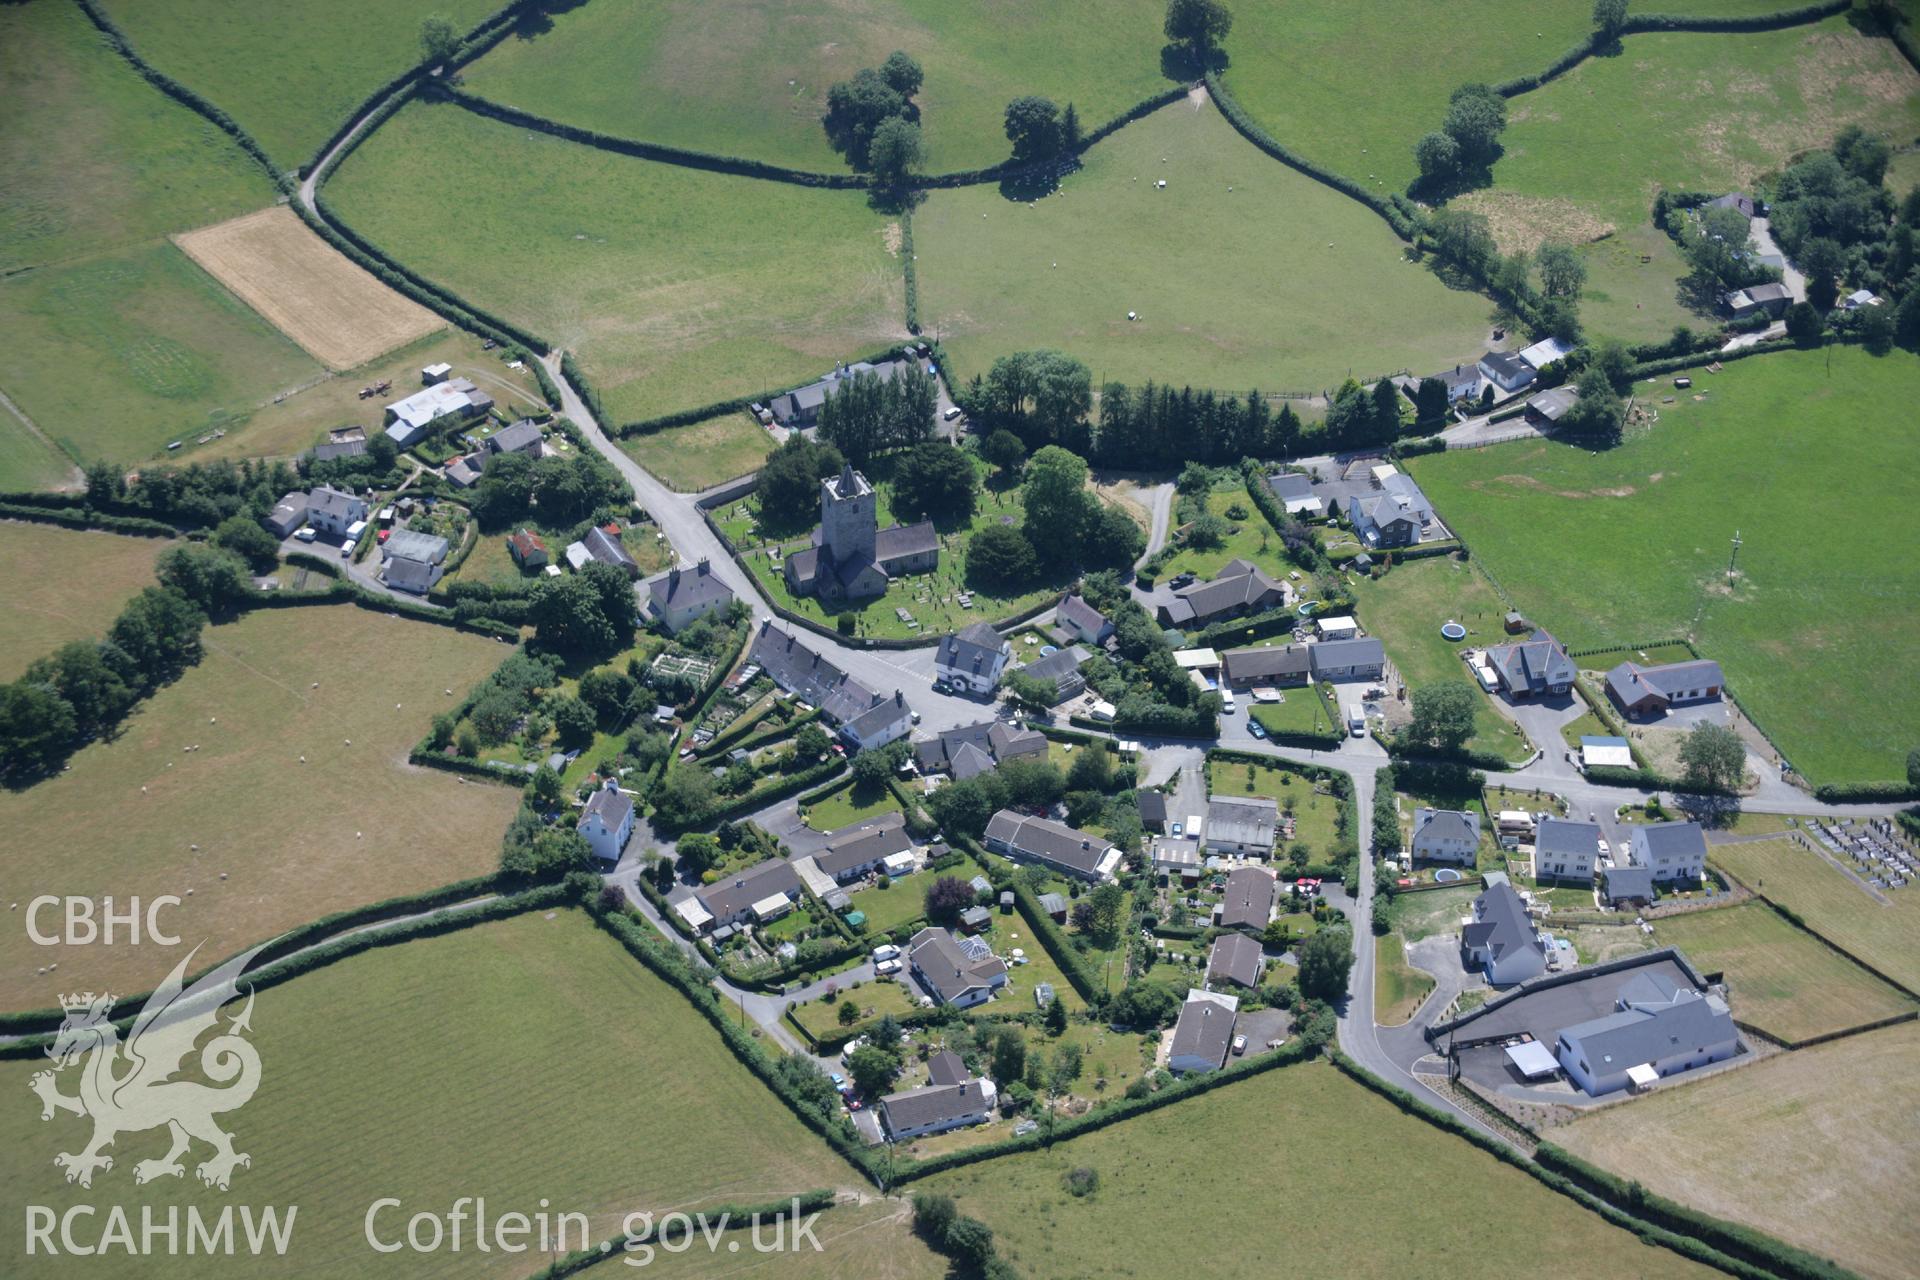 RCAHMW colour oblique aerial photograph of Llanfihangel y Creuddyn village. Taken on 17 July 2006 by Toby Driver.